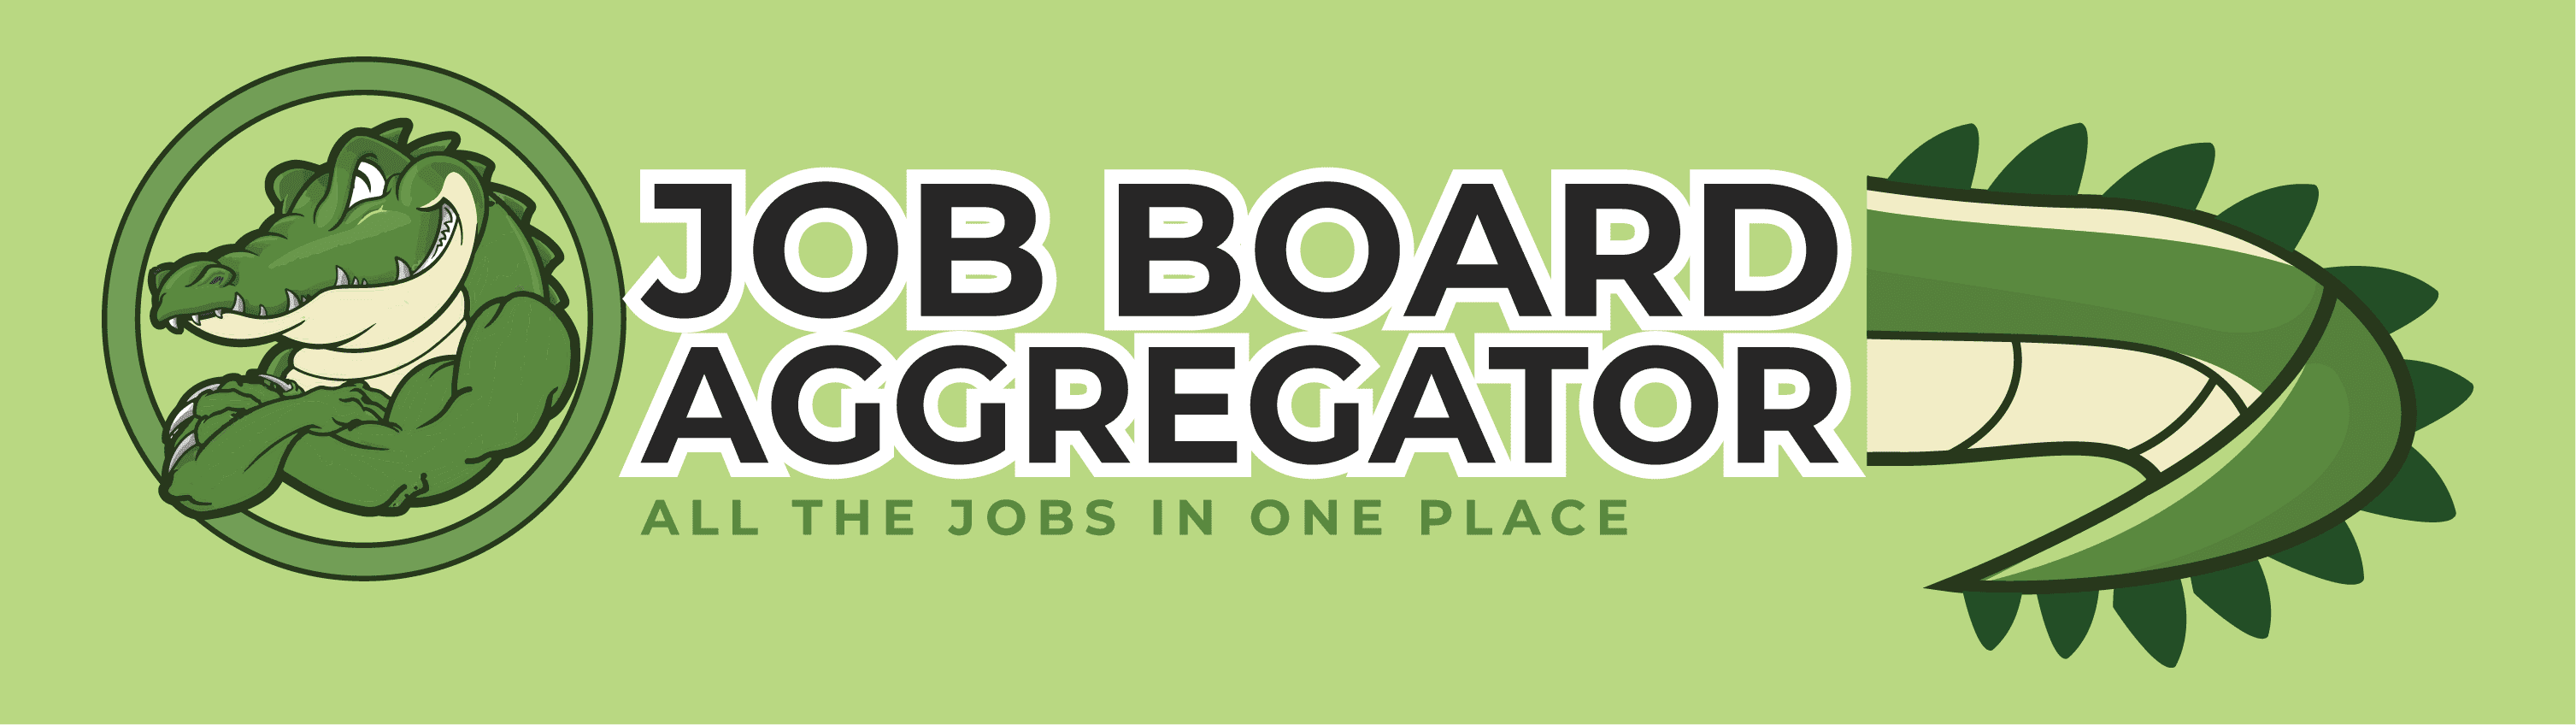 Job Board Aggregator - Wordmark Logo - Transparent High Resolution 2